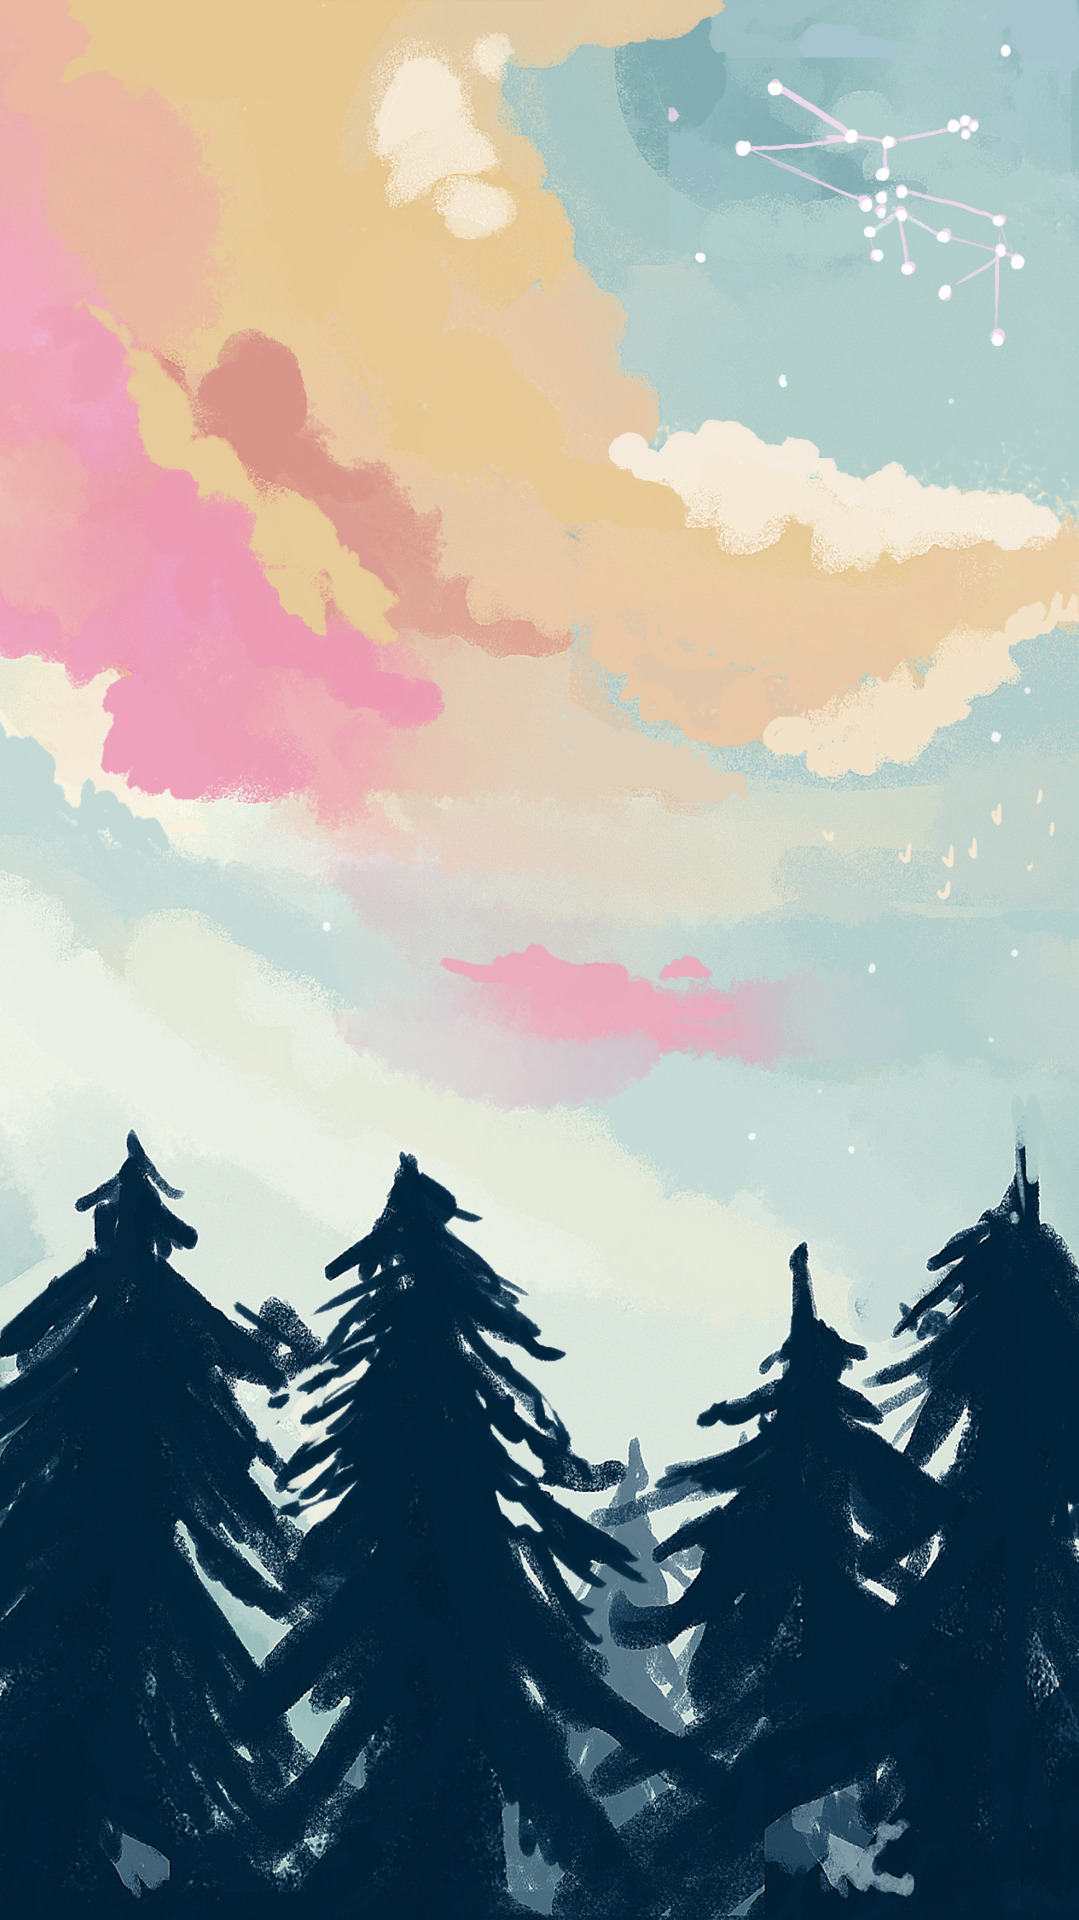 fonds d'écran tumblr mignon,ciel,arbre,nuage,illustration,dessin animé